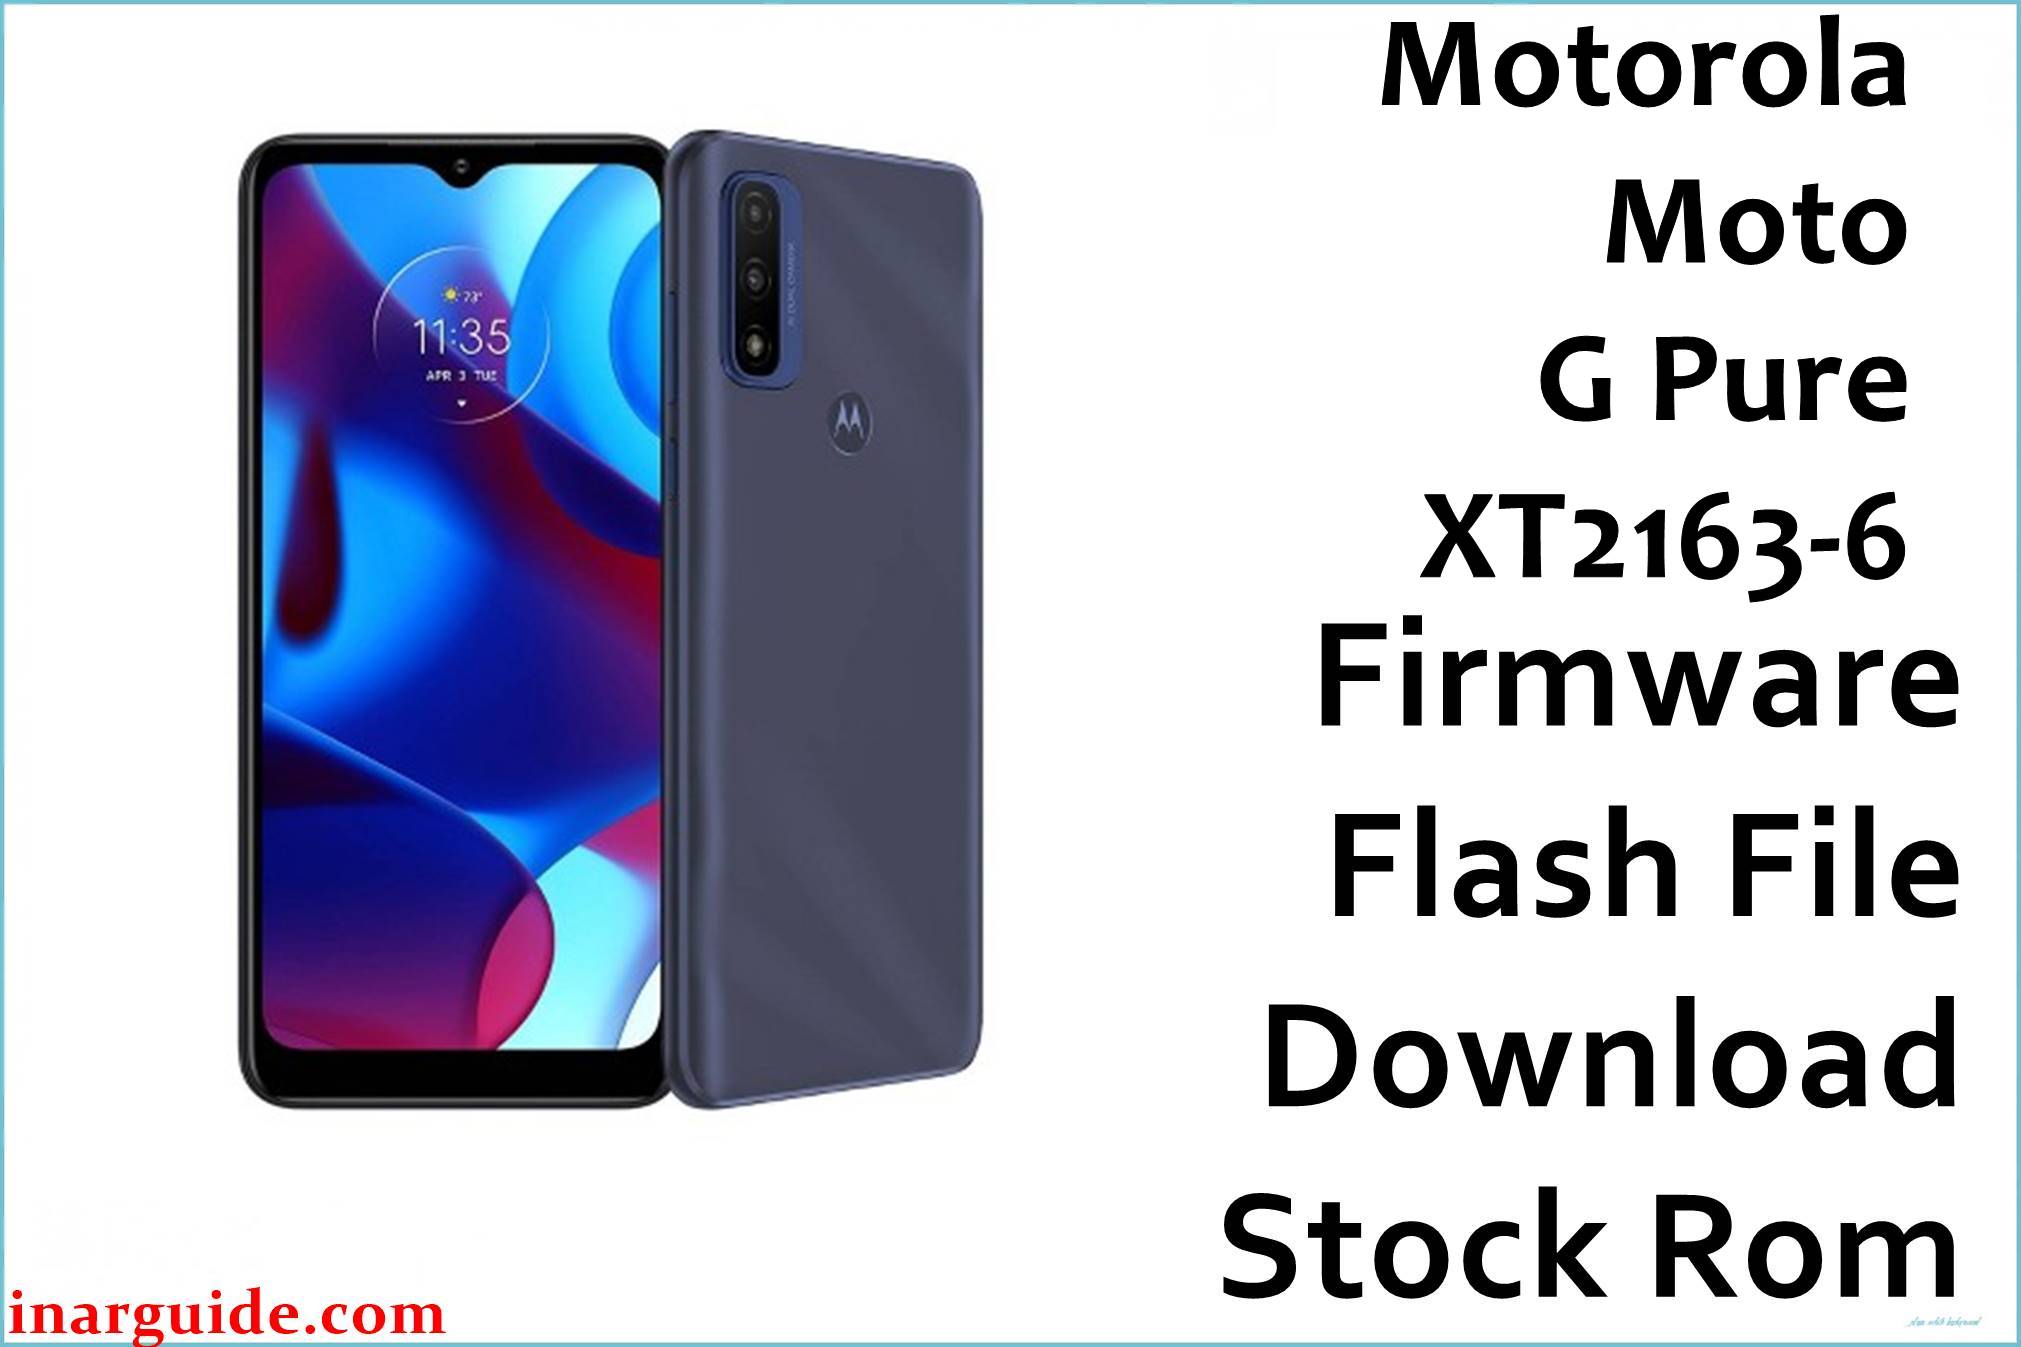 Motorola Moto G Pure XT2163-6